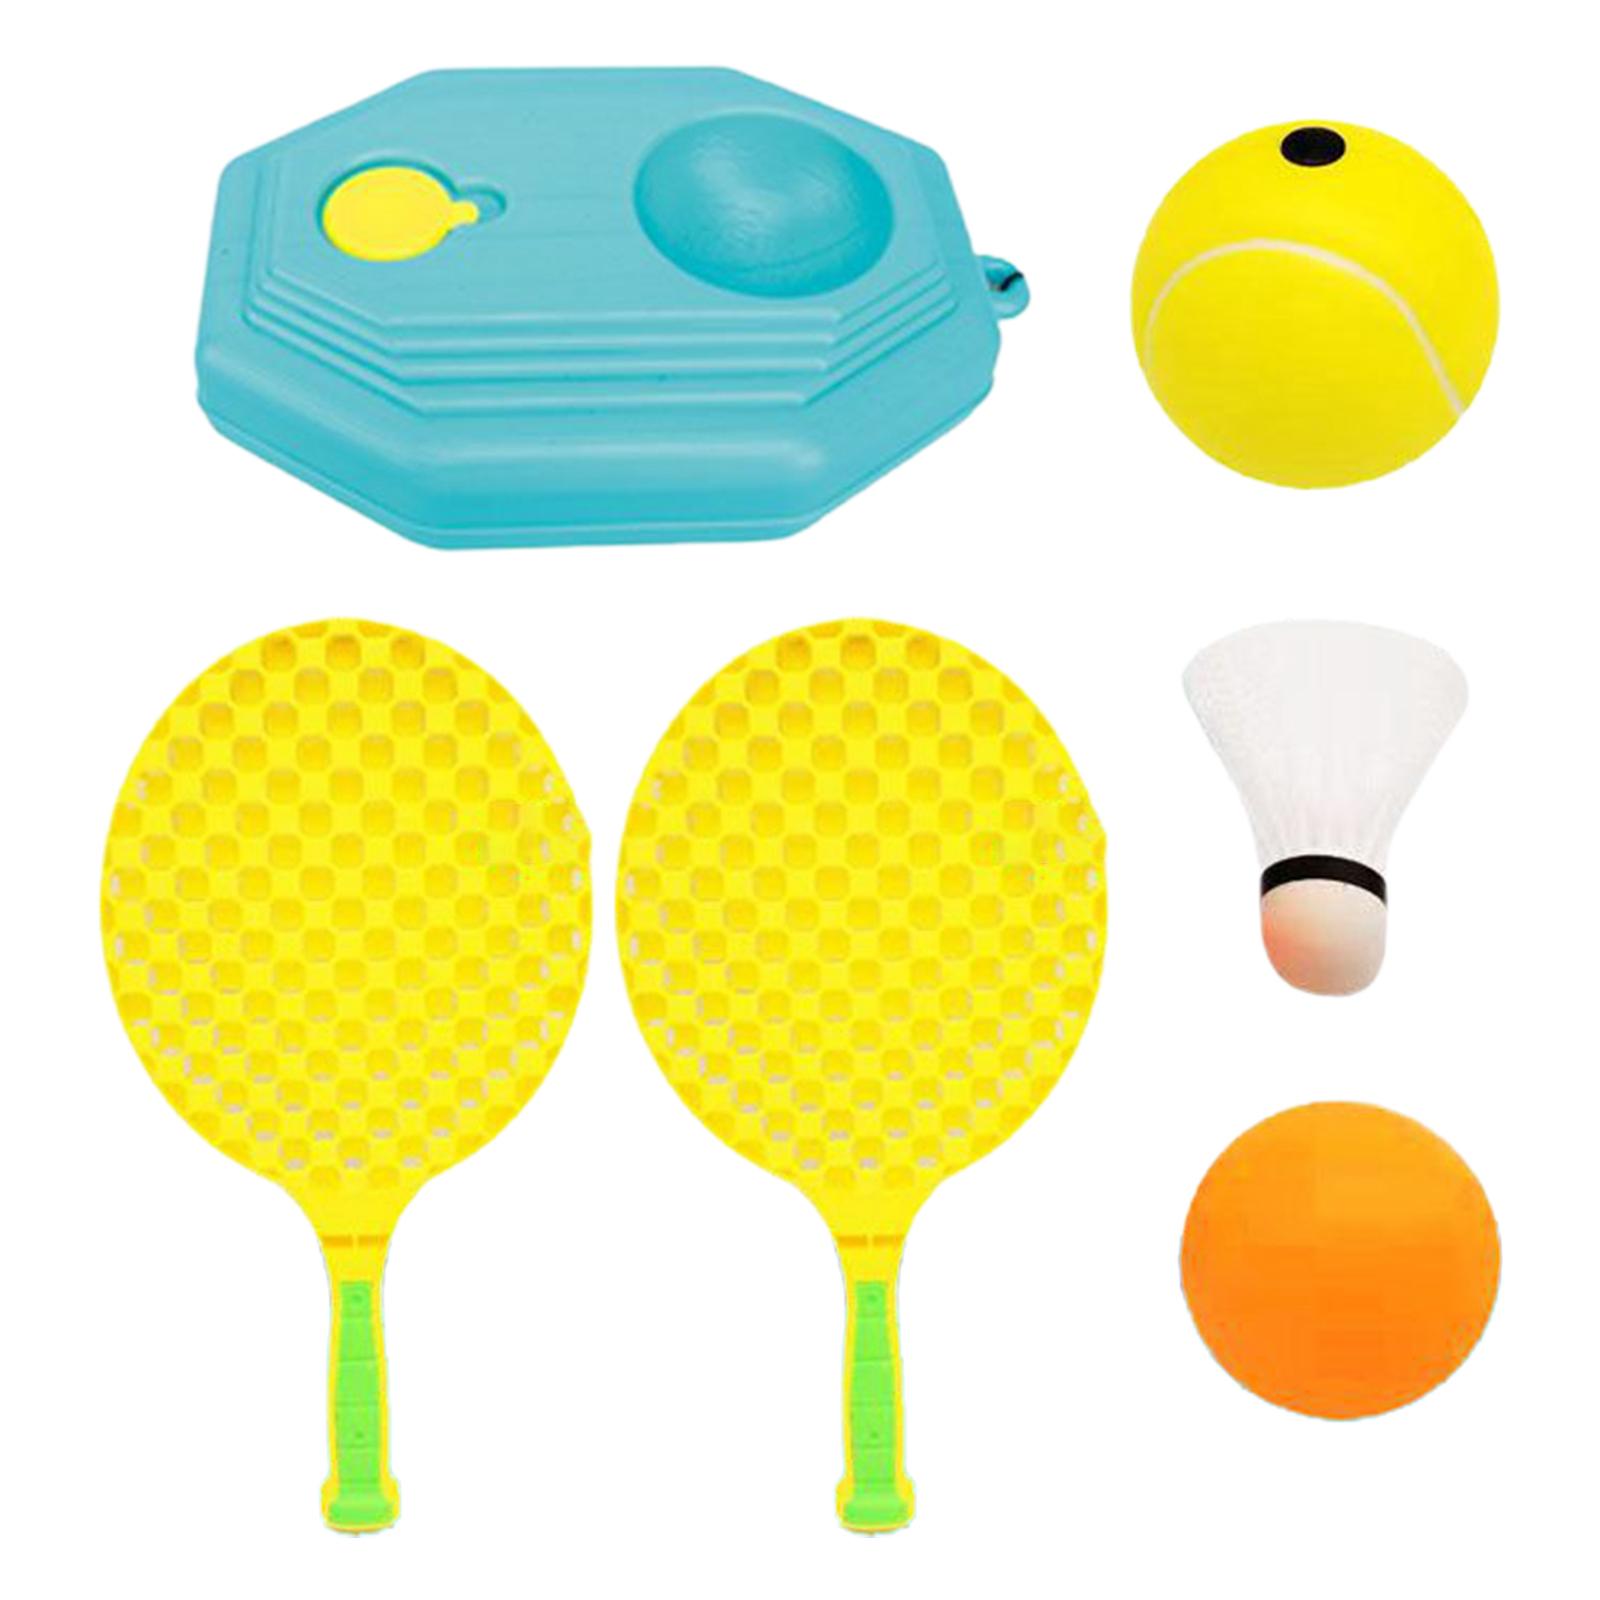 Solo Tennis Trainer Gift Accs Kids Tennis Racket for Park Practice Beginners